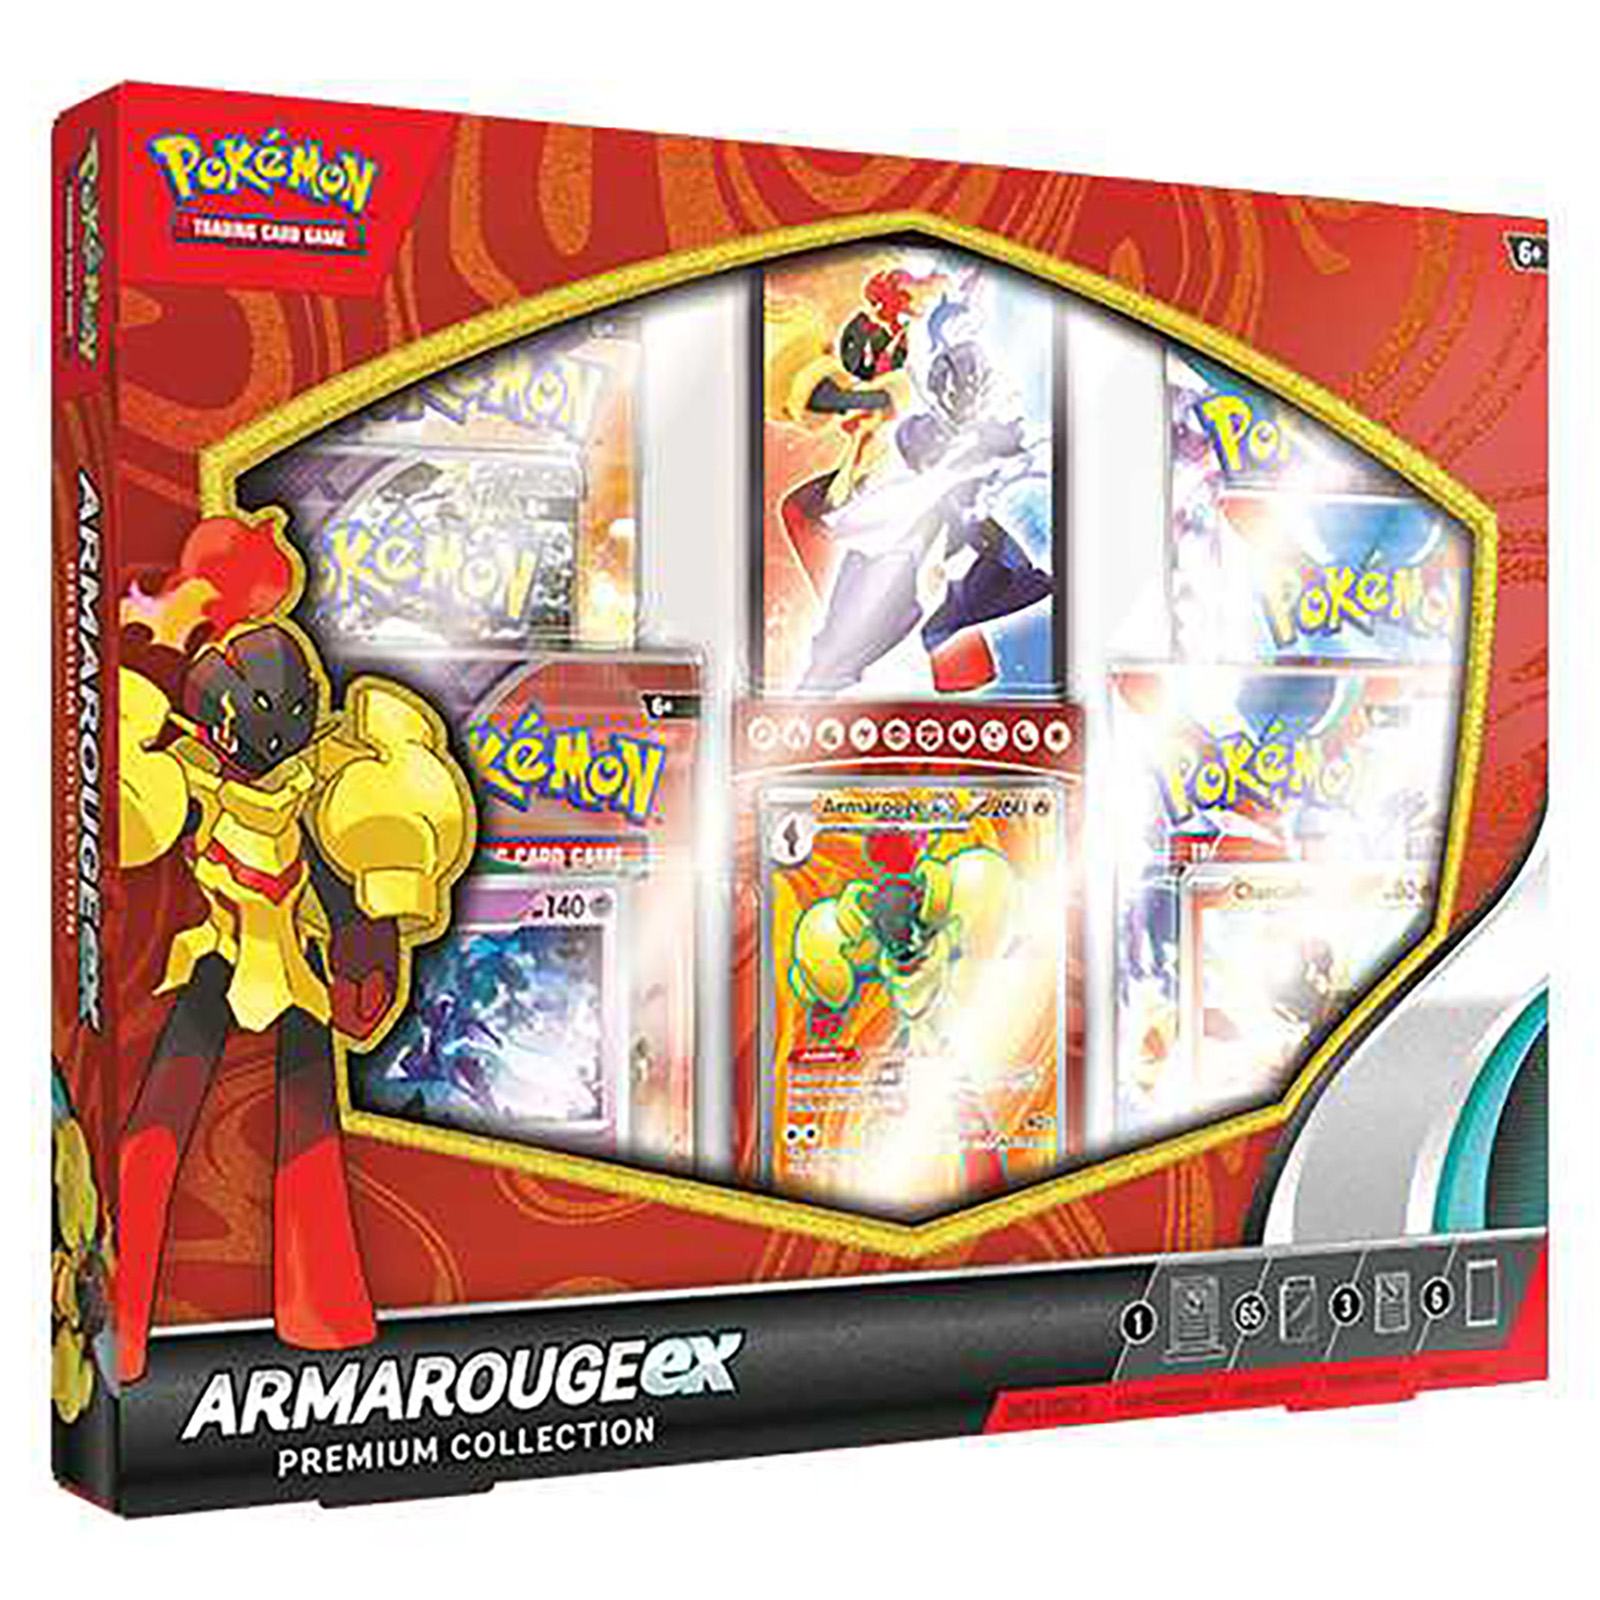 Photos - Board Game Asmodee Pokémon TCG: Armarouge ex Premium Collection POK85752 